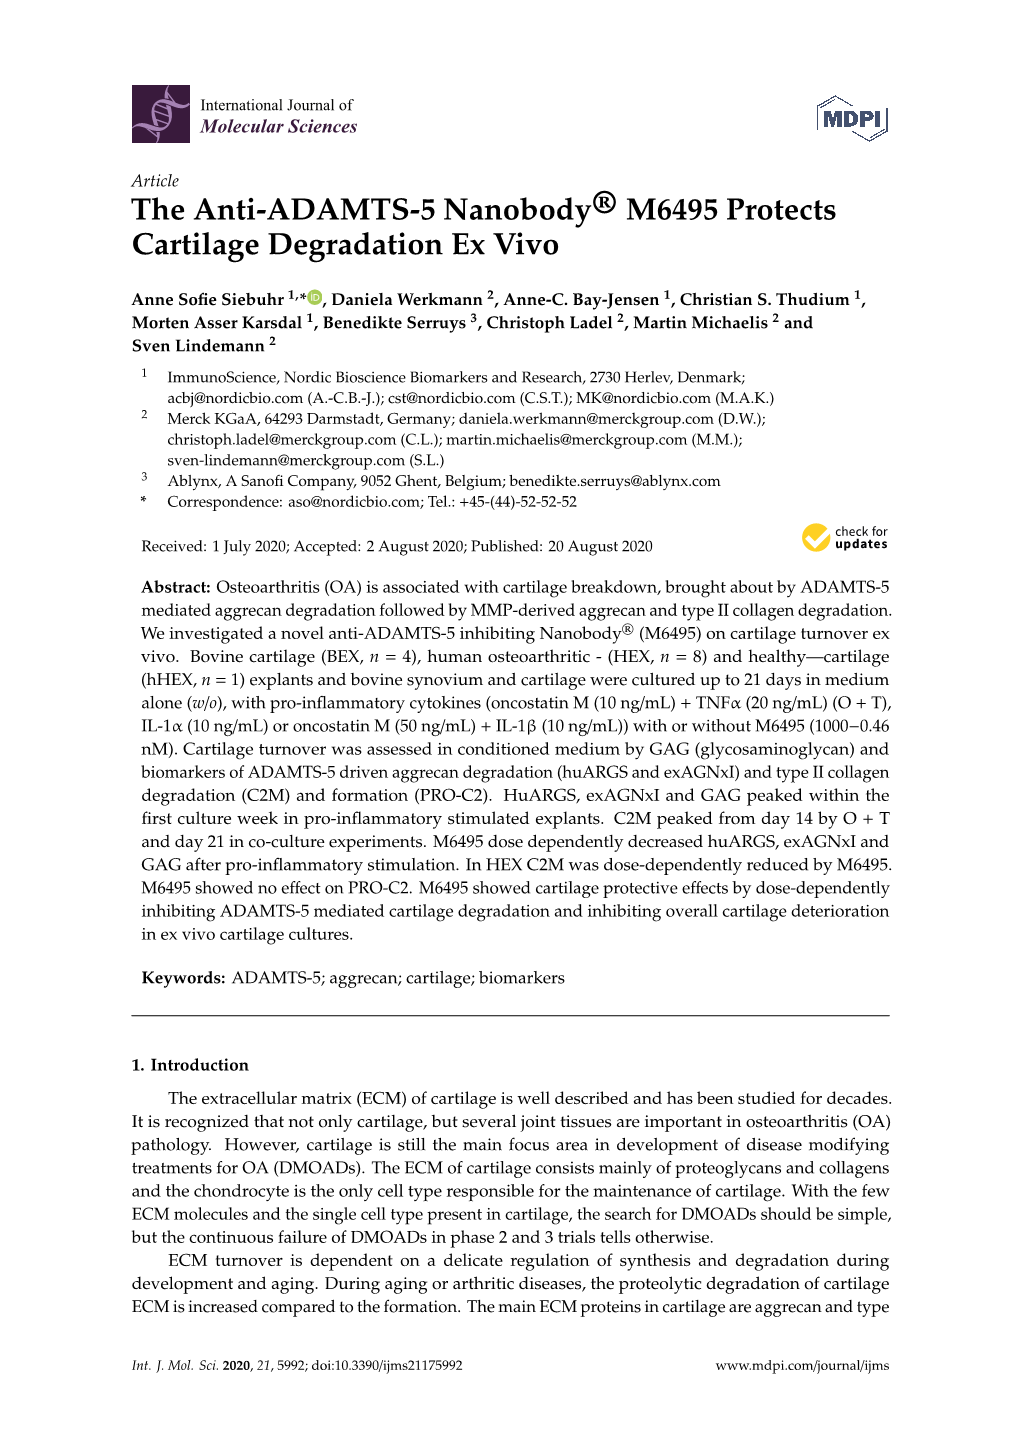 The Anti-ADAMTS-5 Nanobody® M6495 Protects Cartilage Degradation Ex Vivo